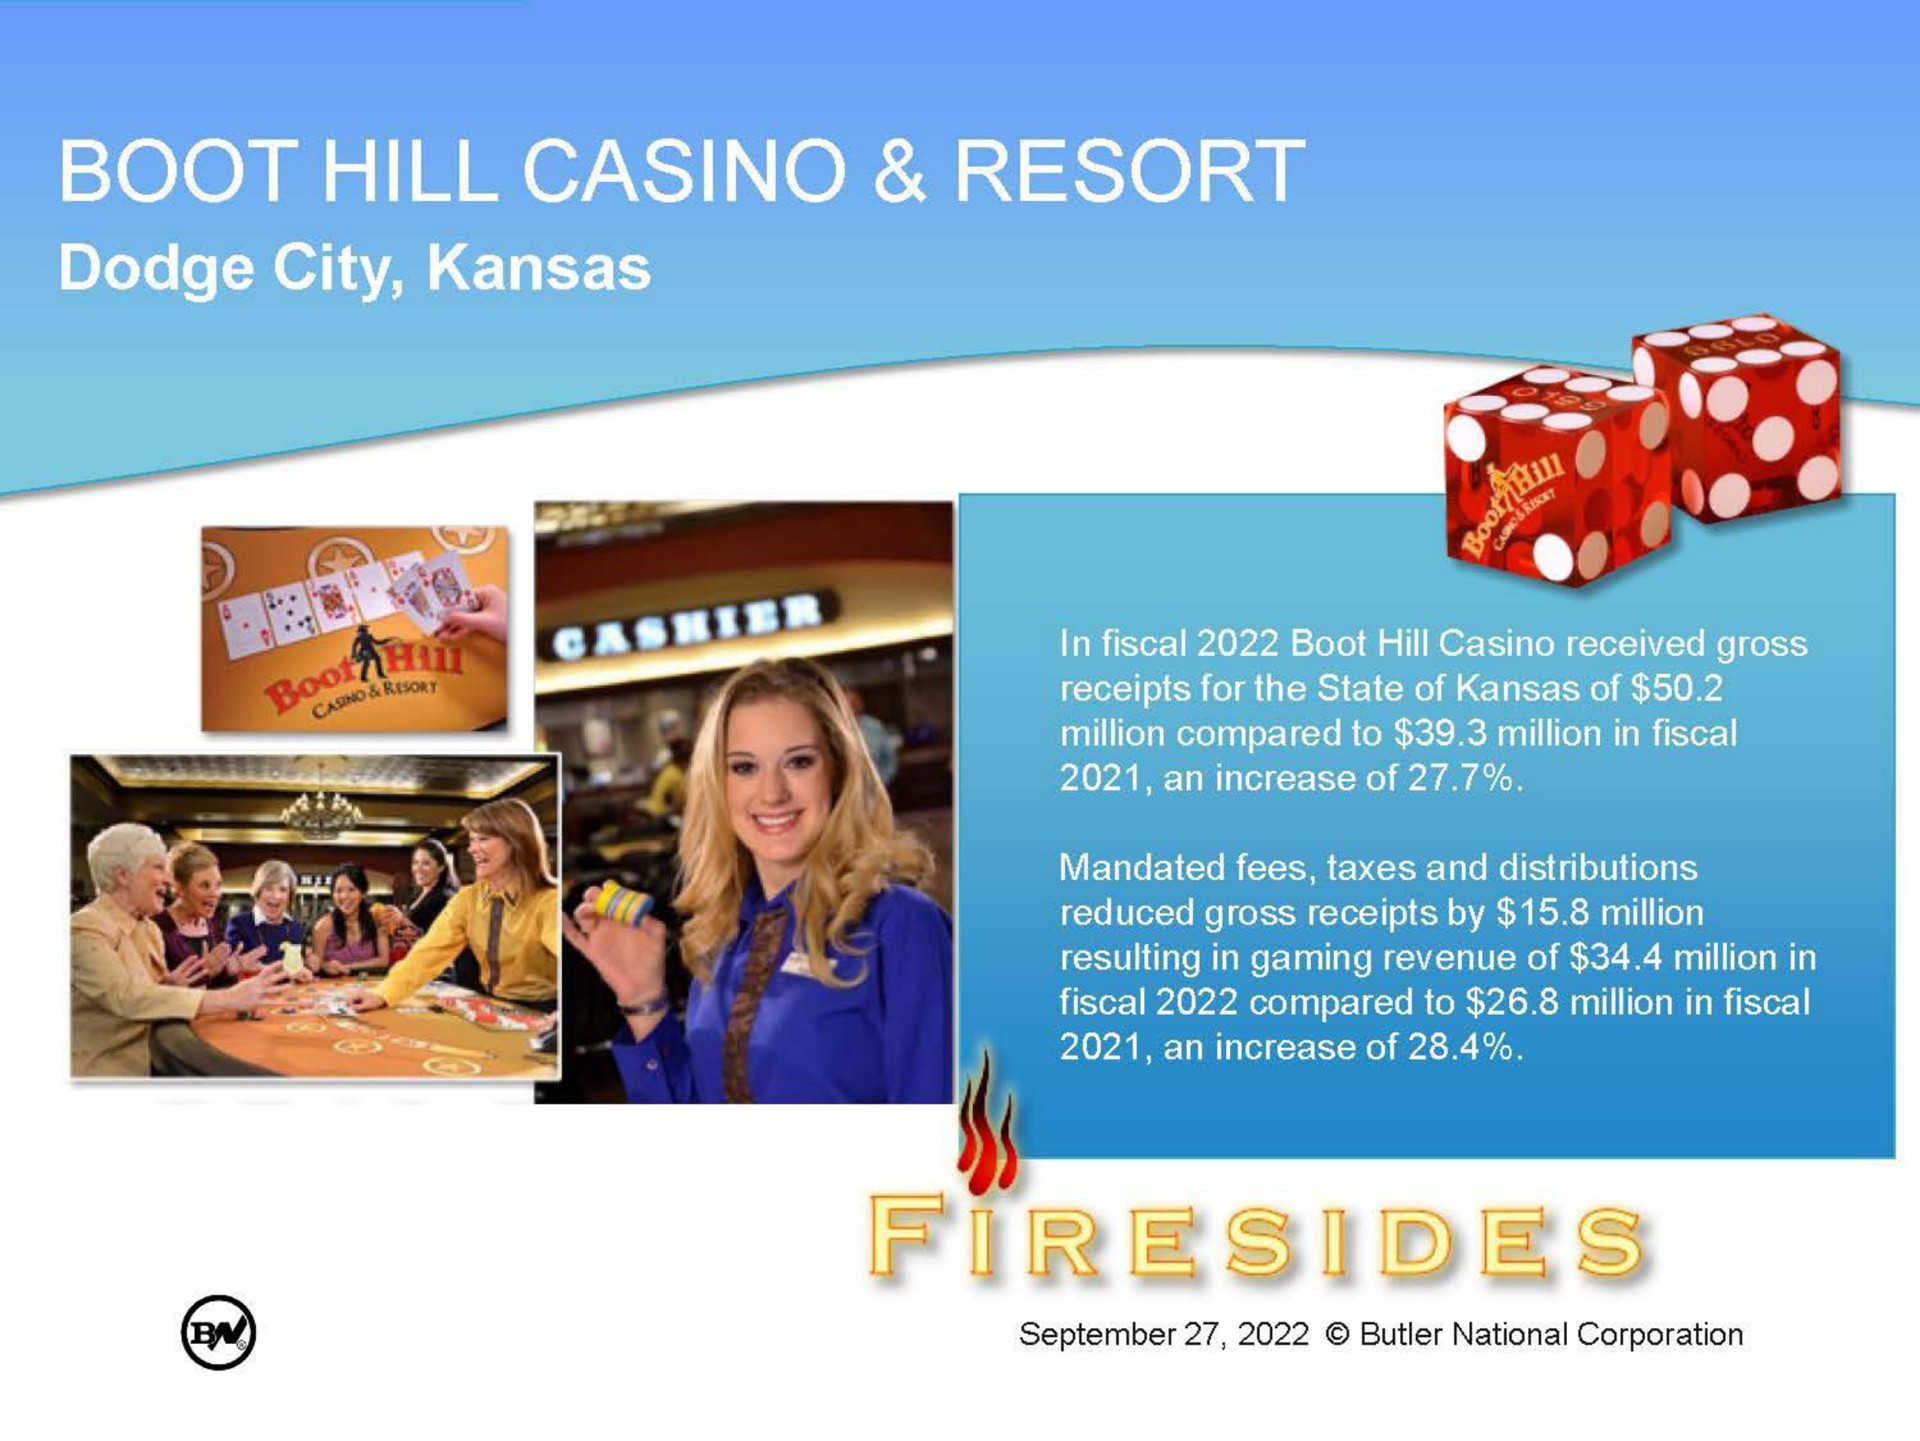 boot hill casino resort firesides | Butler National Corporation